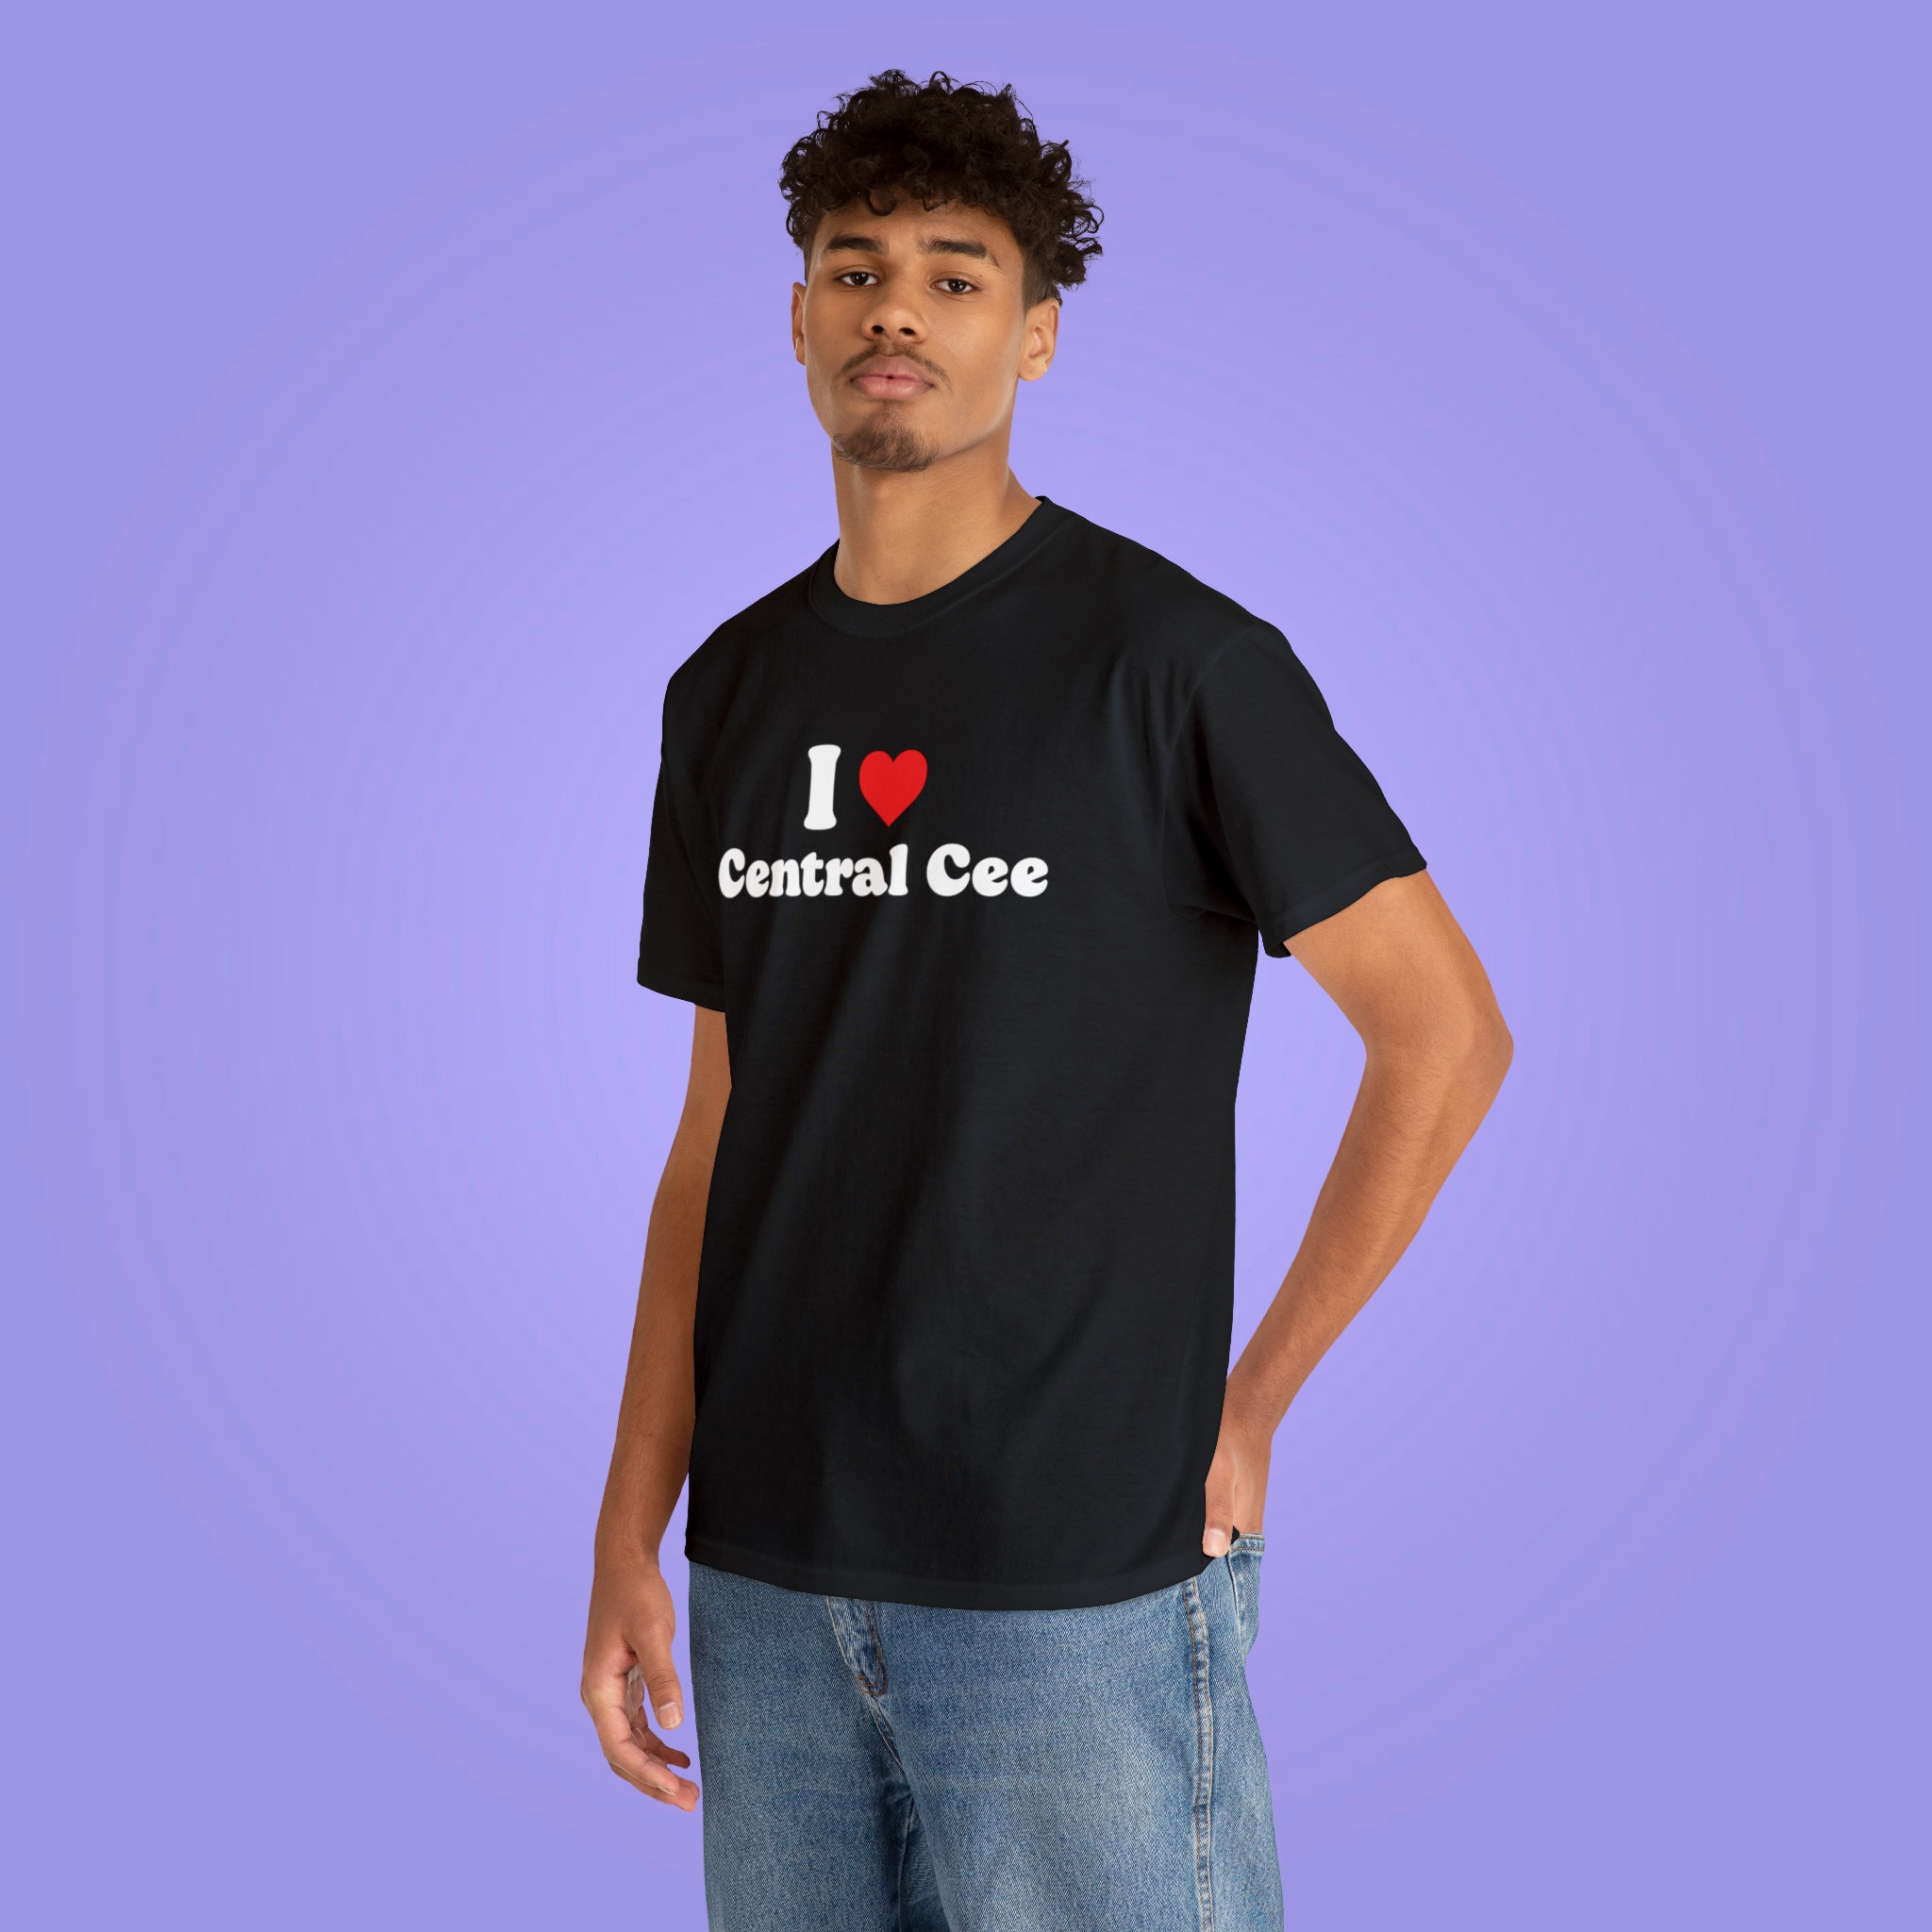 Central Cee Graphic Tshirt Man's T-shirt Hip Hop Vintage Clothes